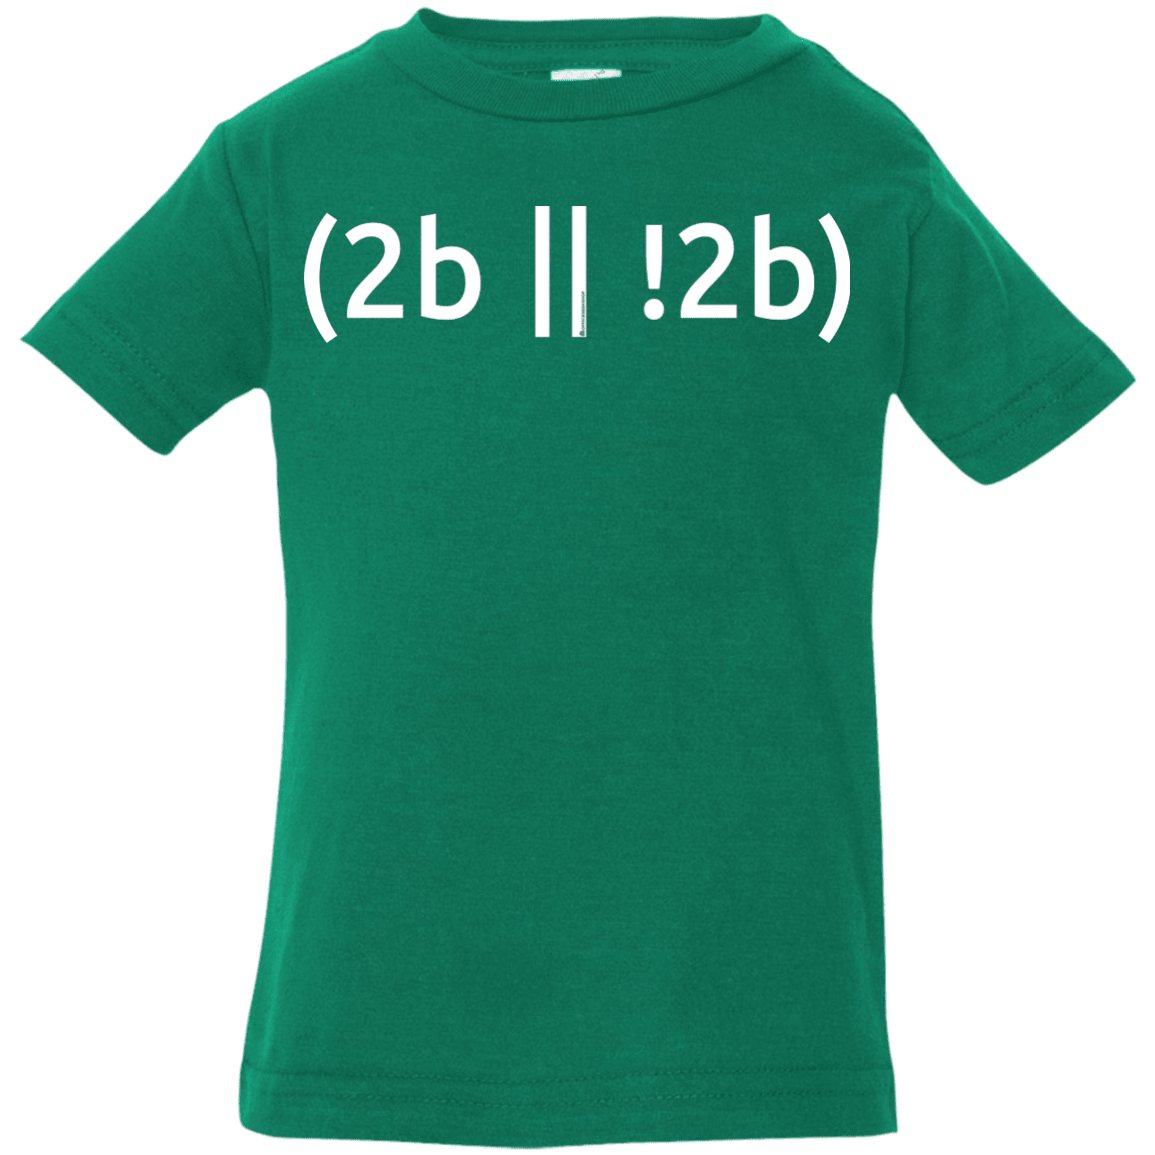 T-Shirts Kelly / 6 Months 2b Or Not 2b Infant Premium T-Shirt